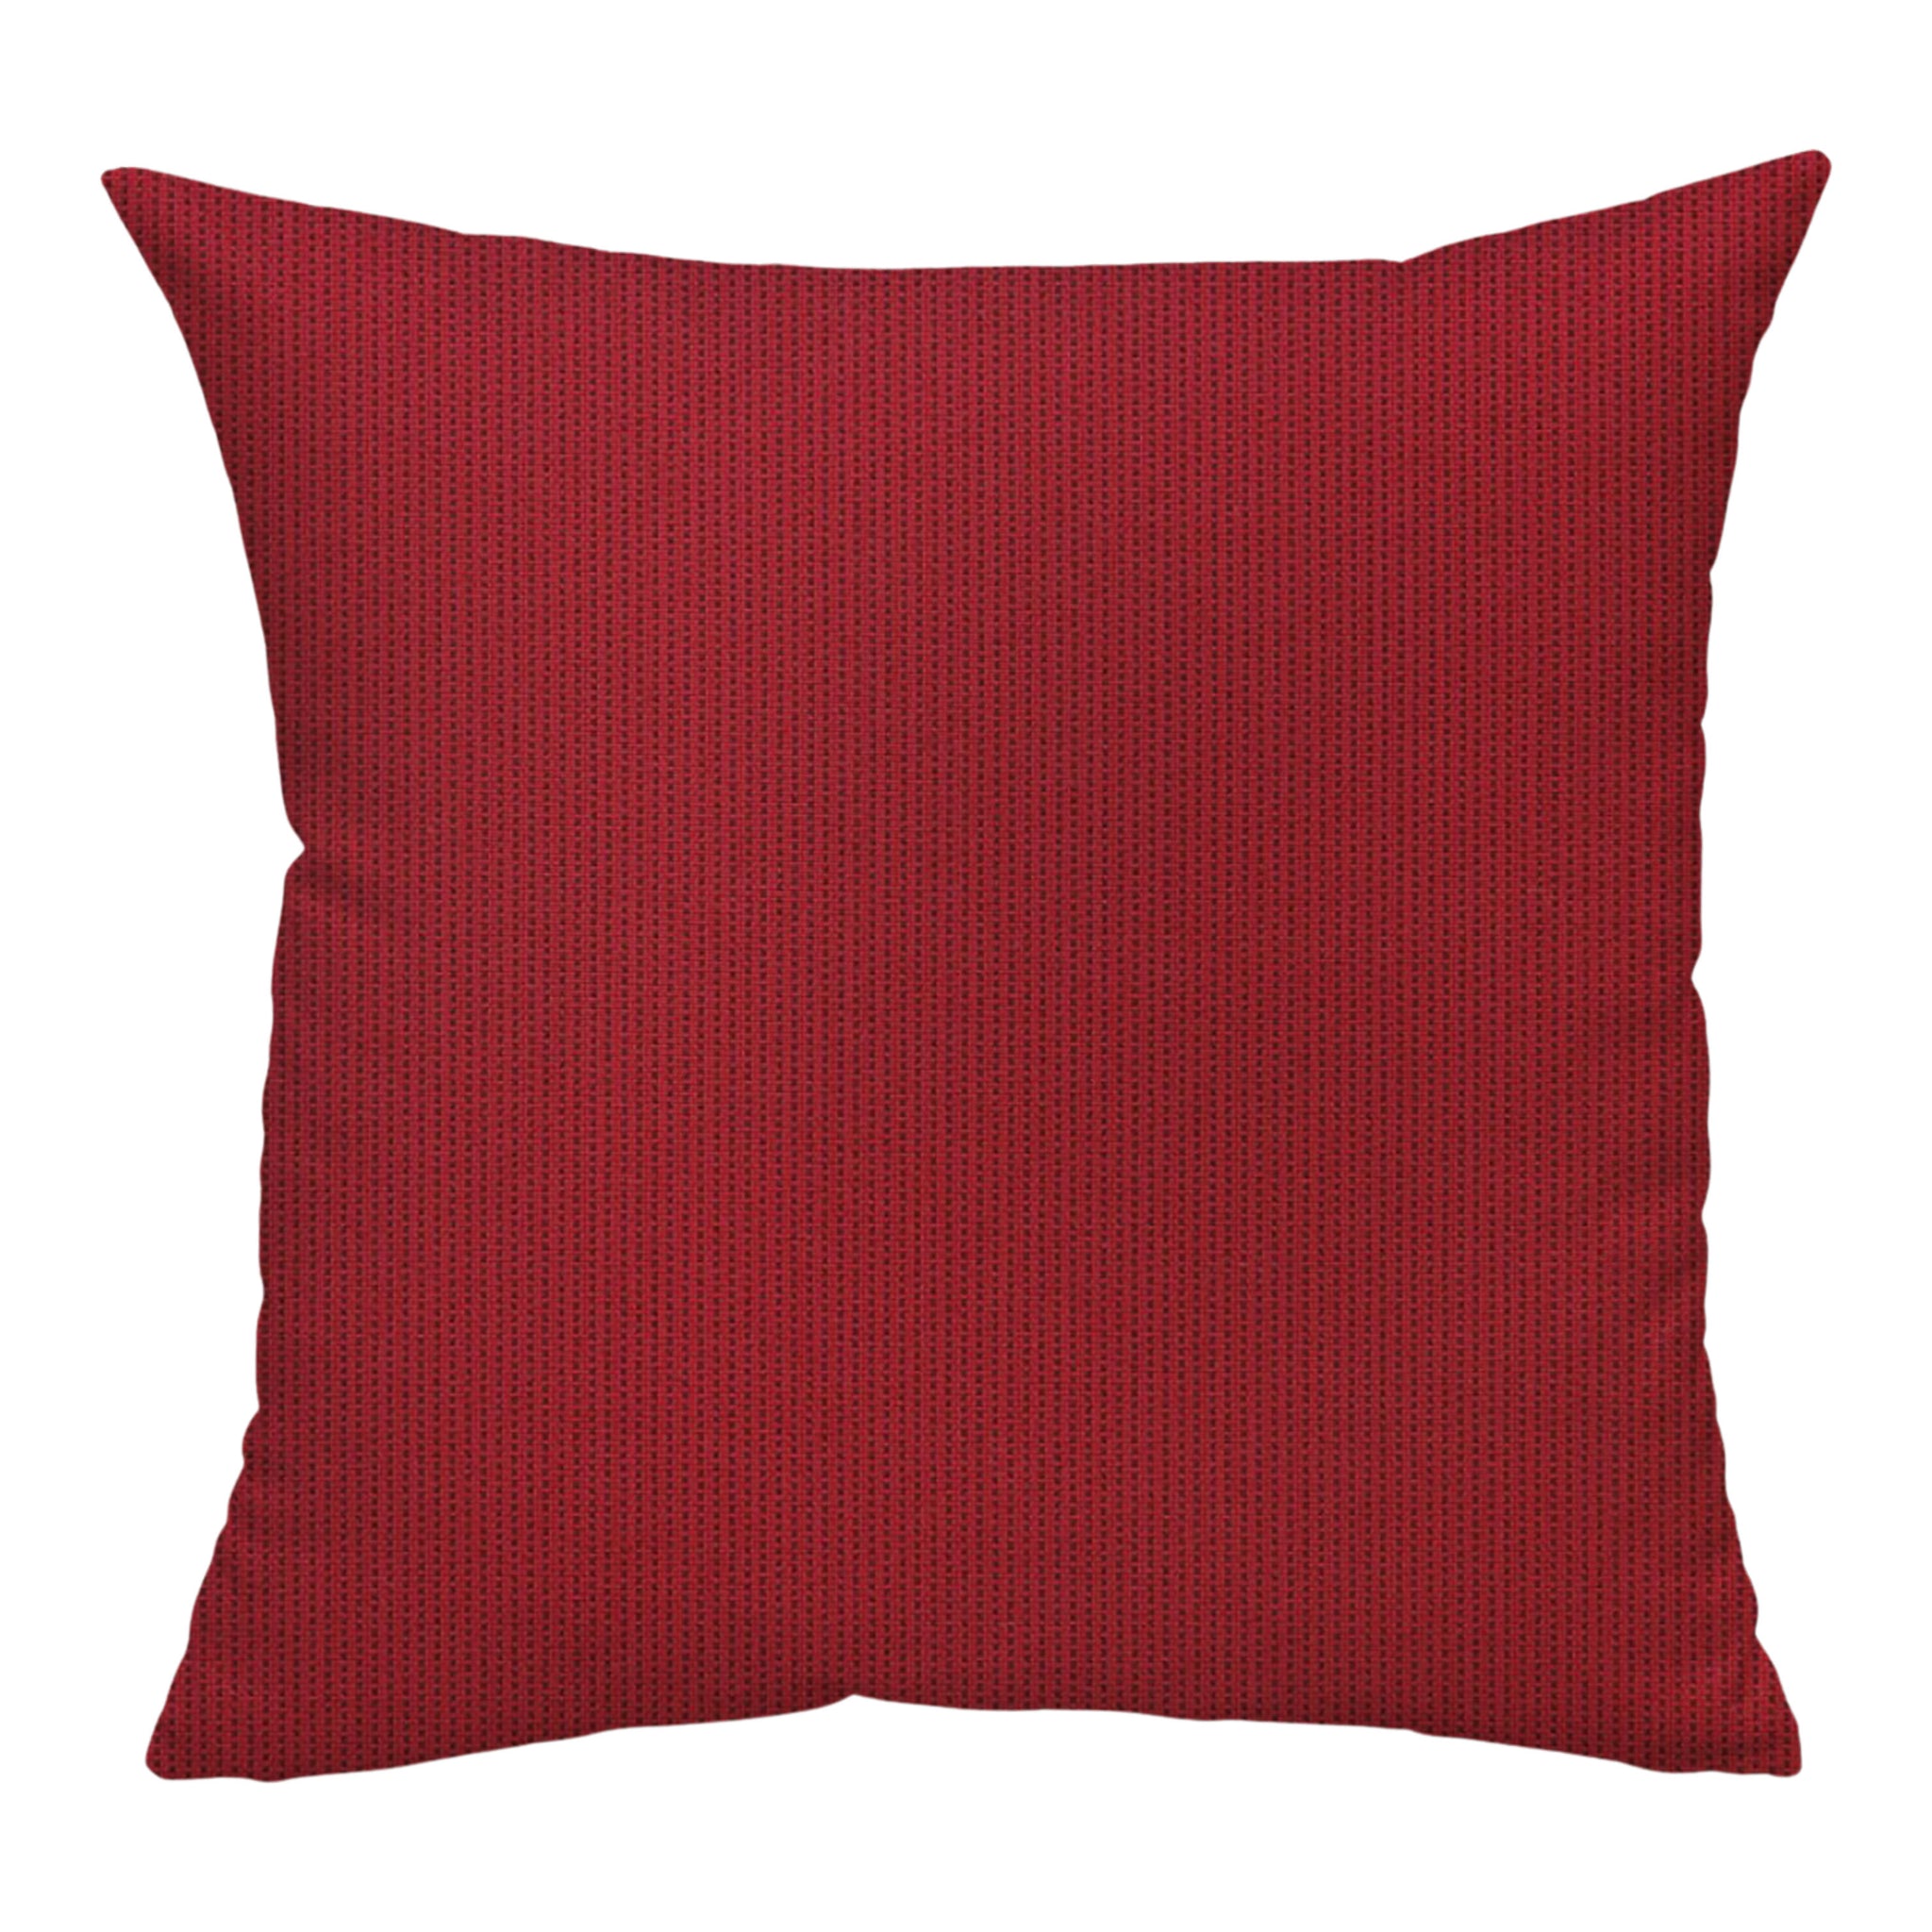 Sunbrella® Spectrum Pillow in Cherry